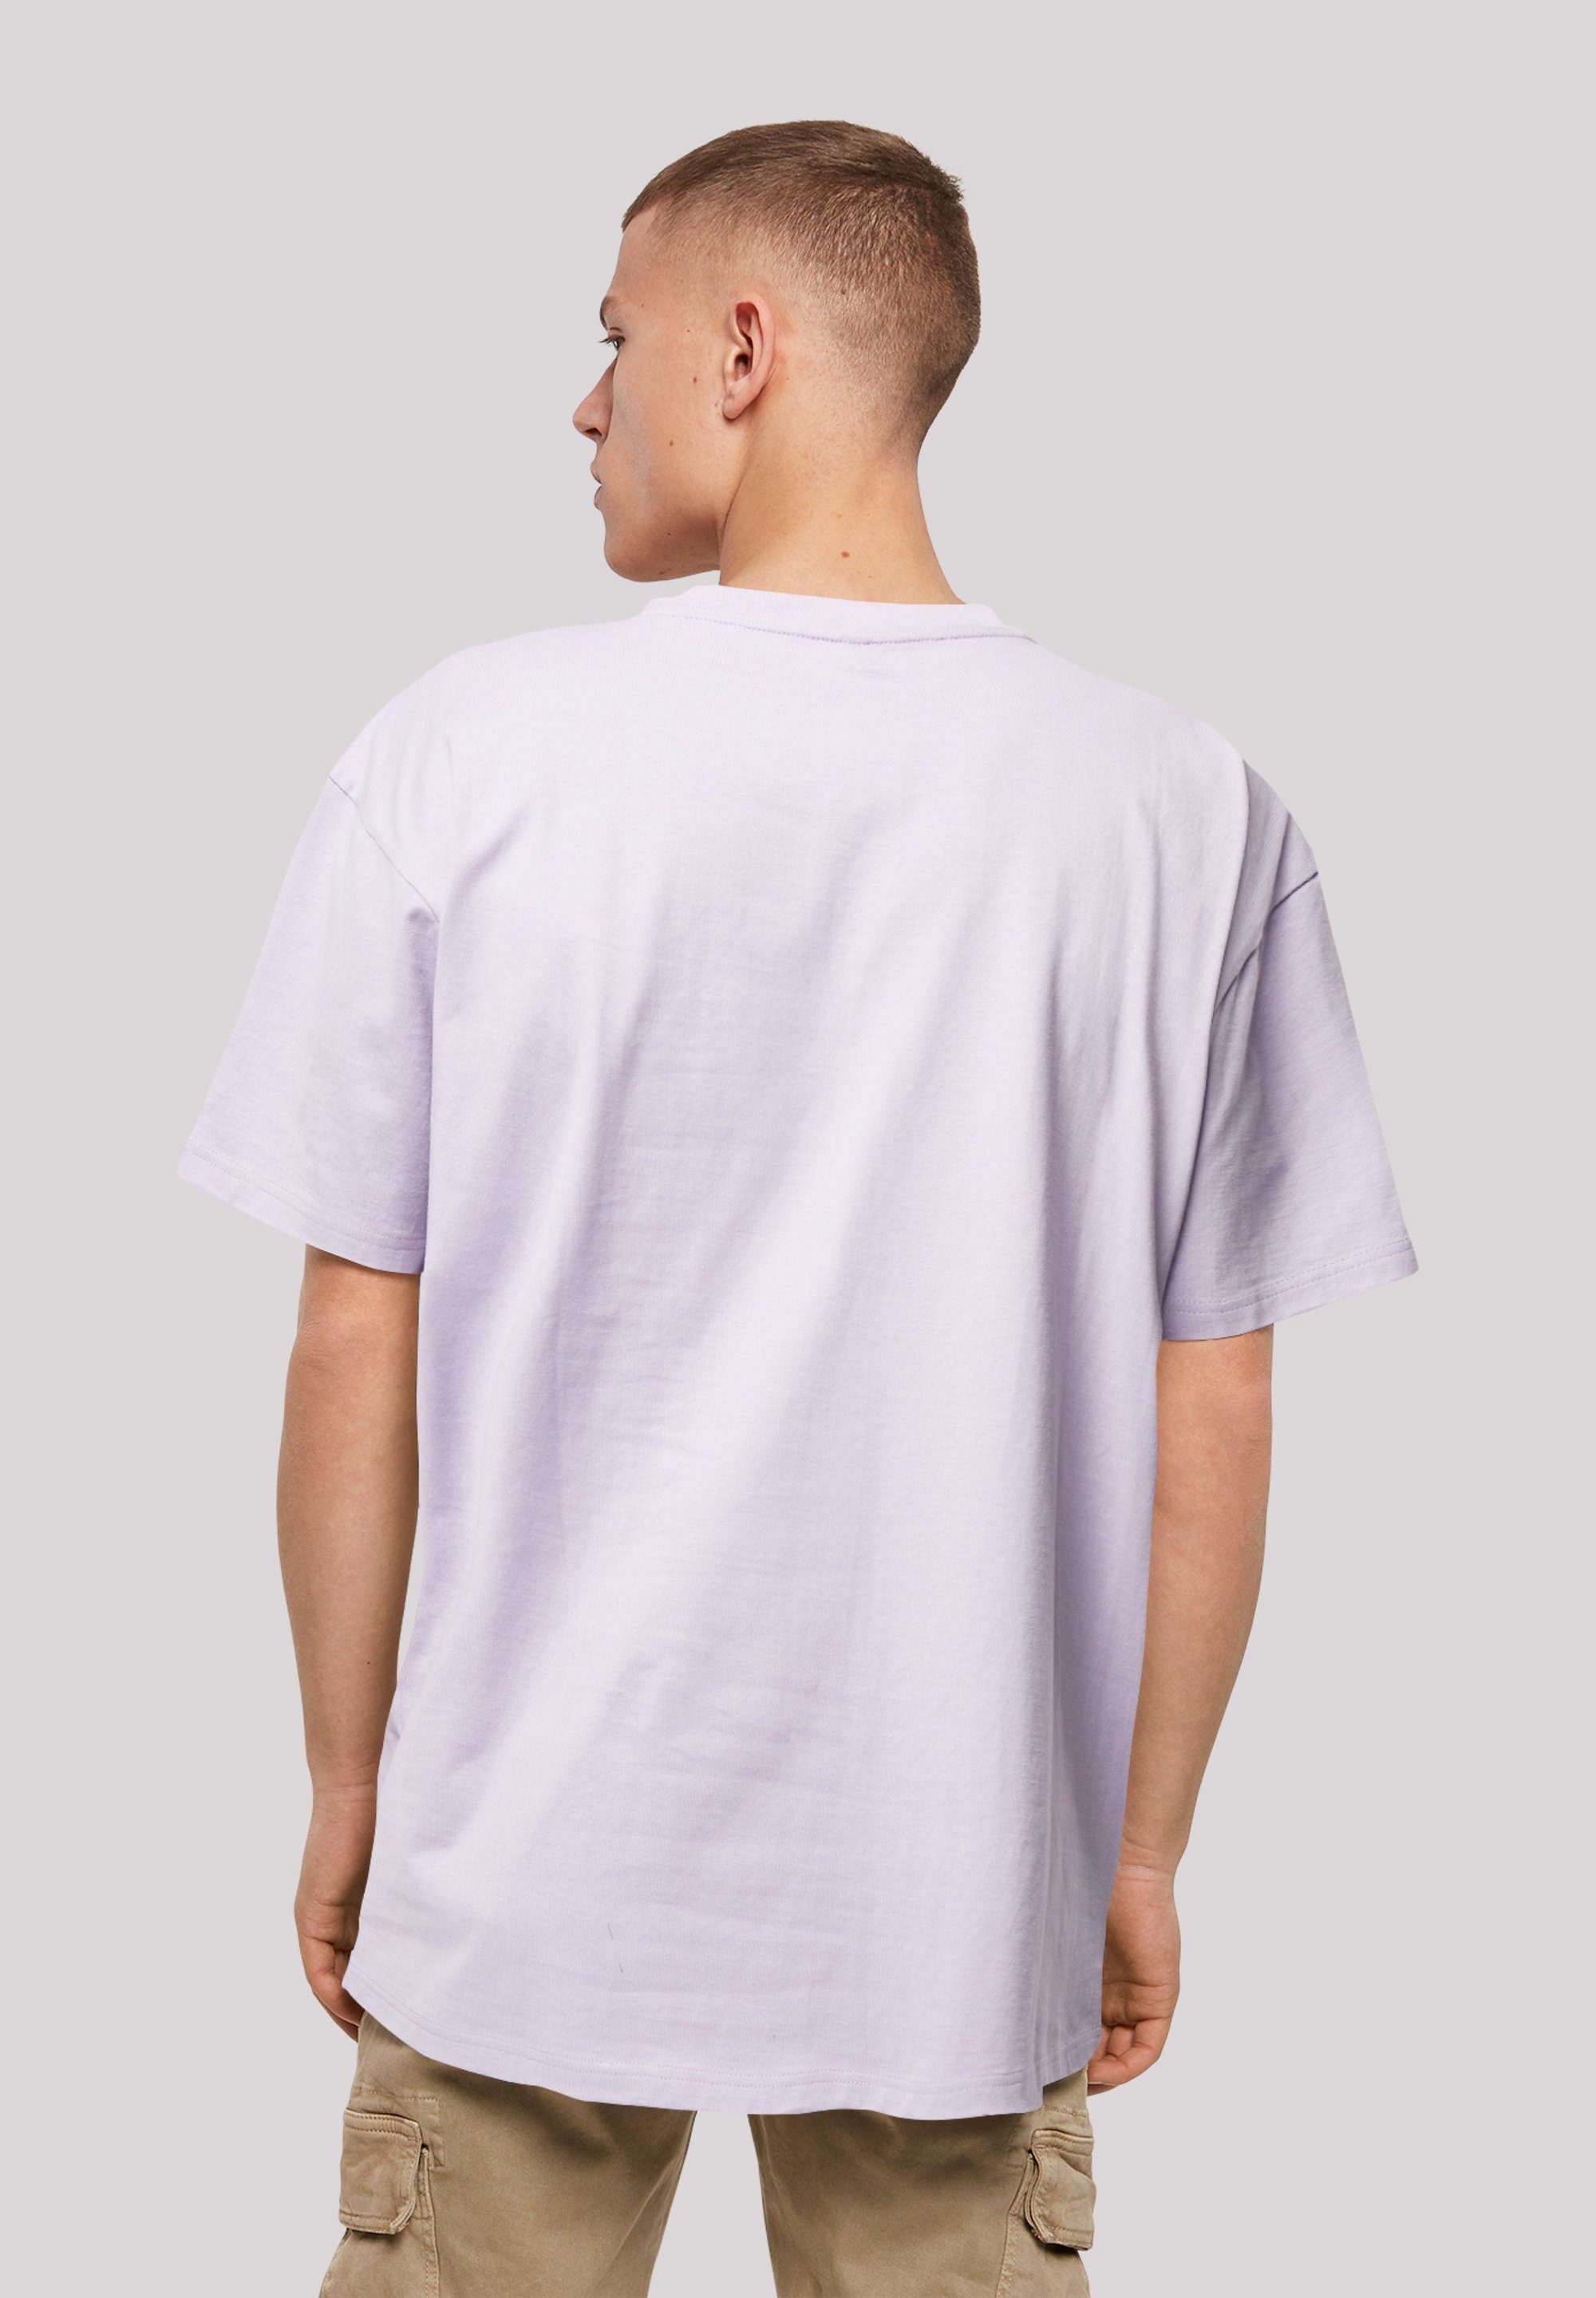 Bitmap F4NT4STIC lilac Gaming Bros SEVENSQUARED Print T-Shirt Retro